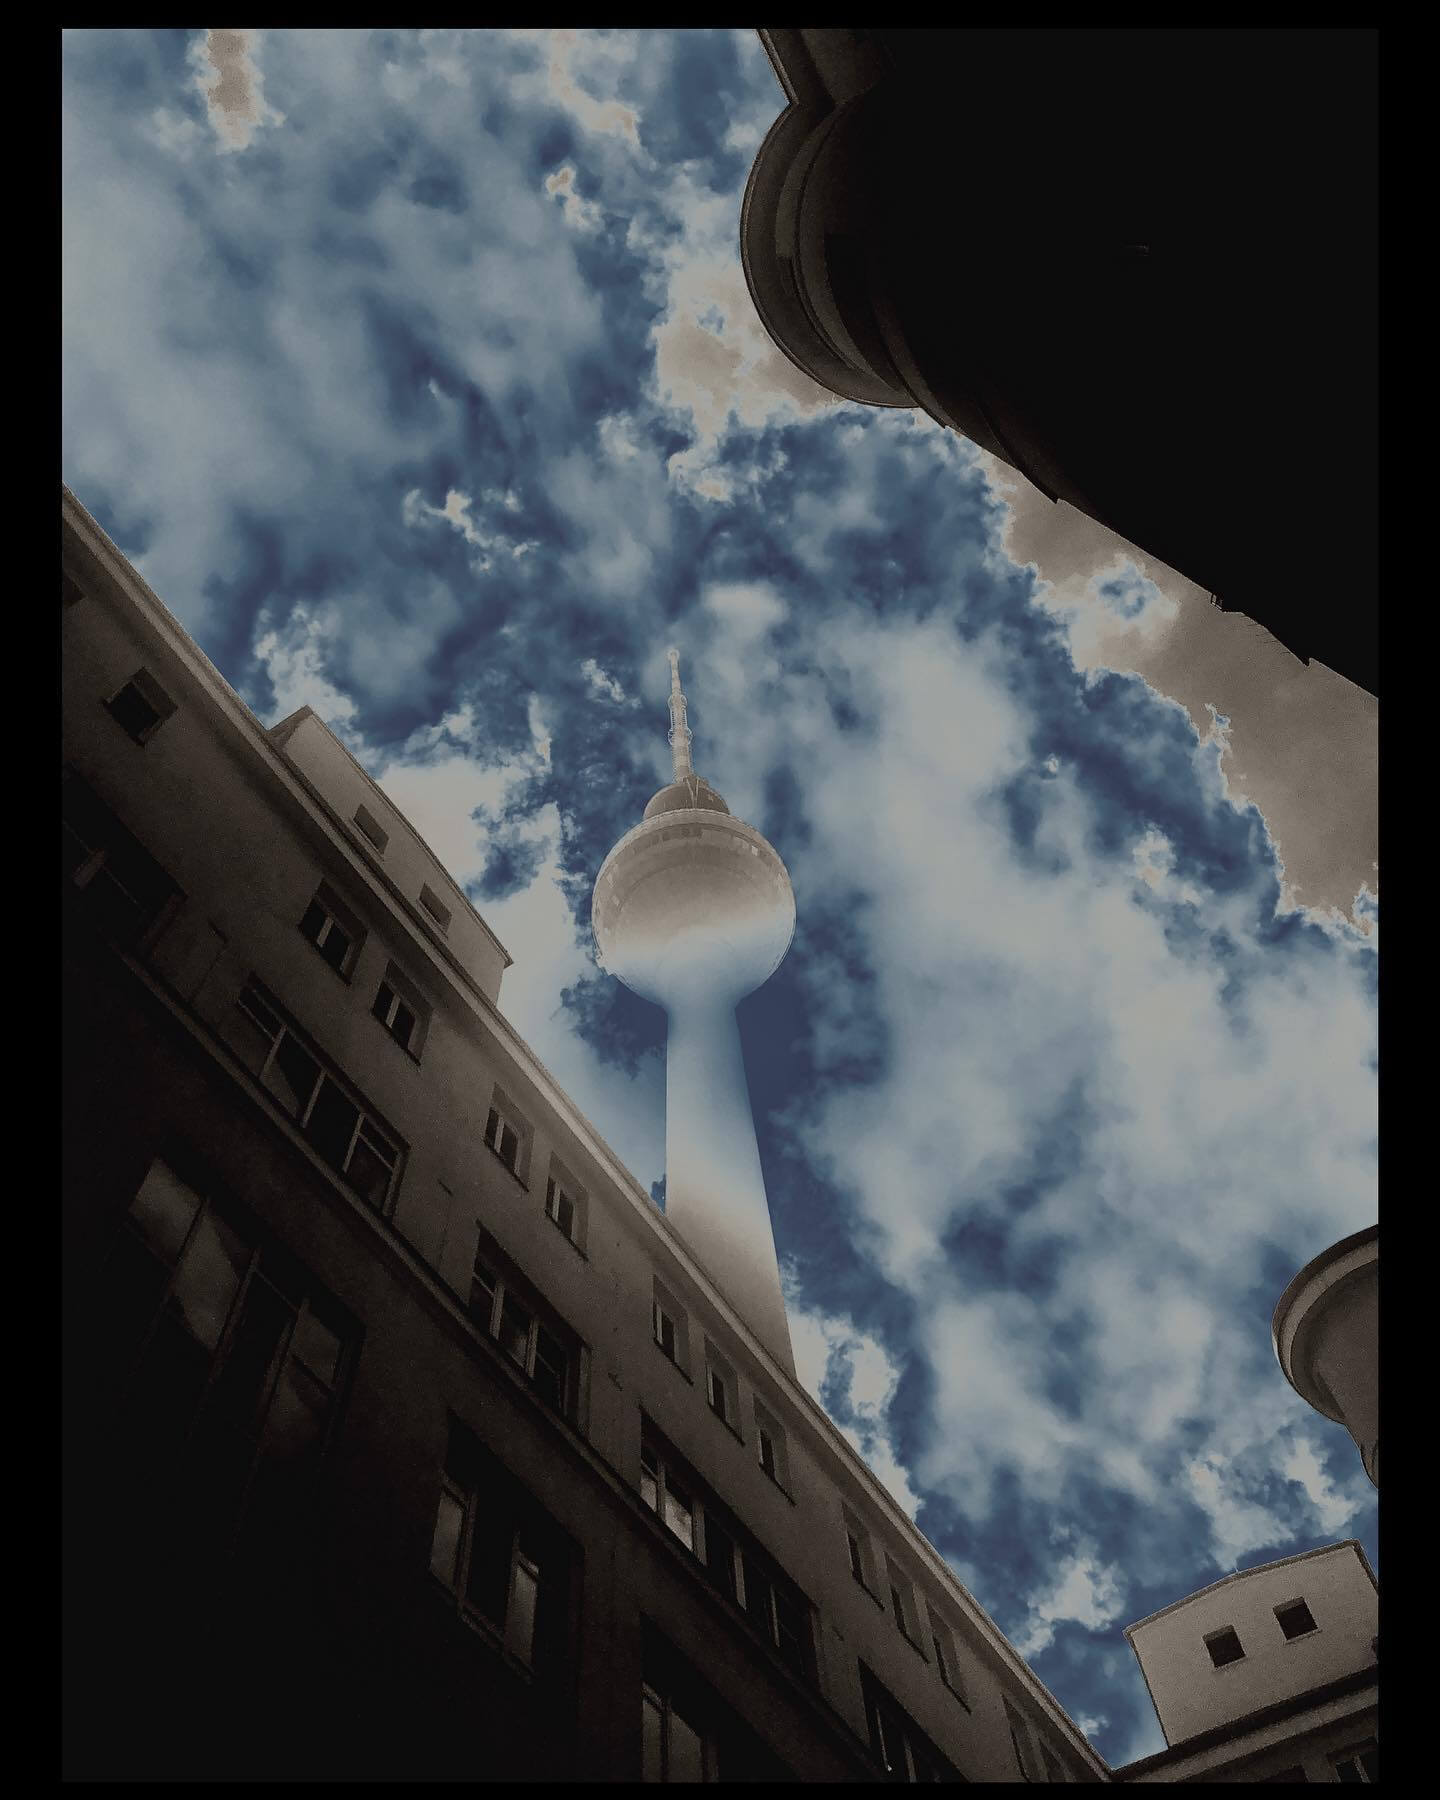 Home.
.
#berlin #love #alexanderplatz #digitalshot #digitalshit #alexanderplatz #home